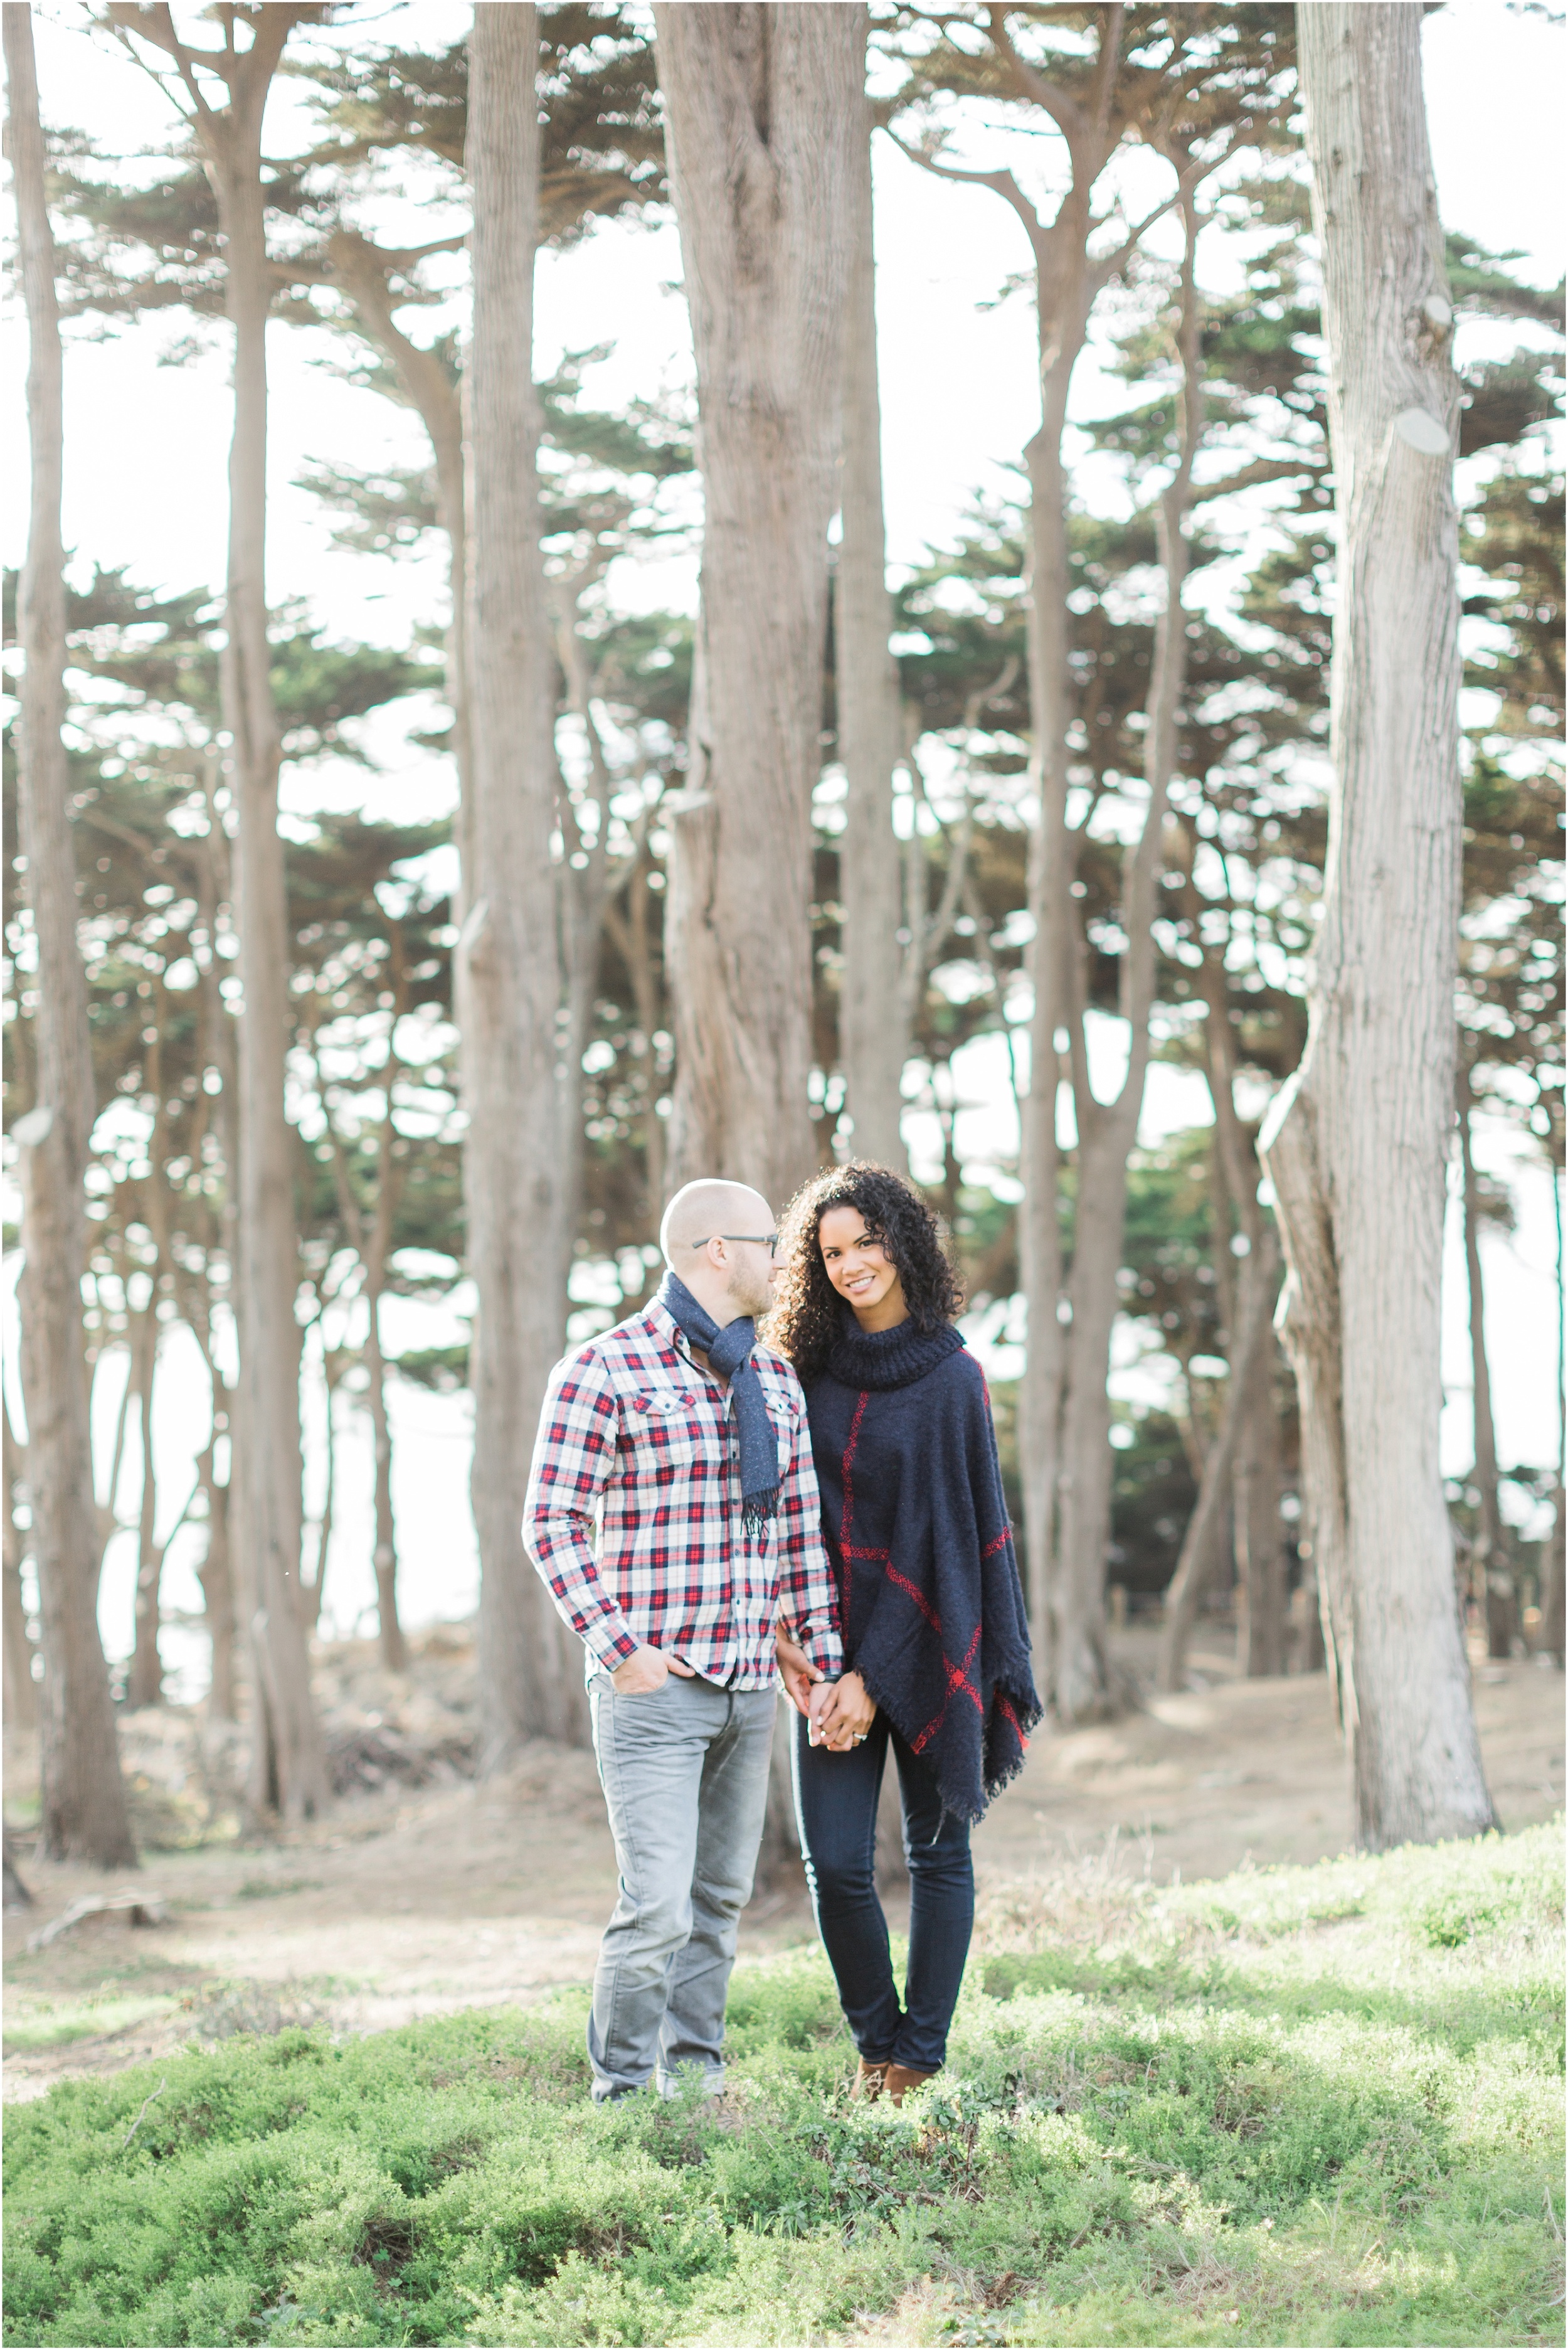 Blueberryphotography.com | San Francisco Based Wedding & Lifestyle Photographer | Engagement Session | Baker Beach | Lands End | Potrero Hill